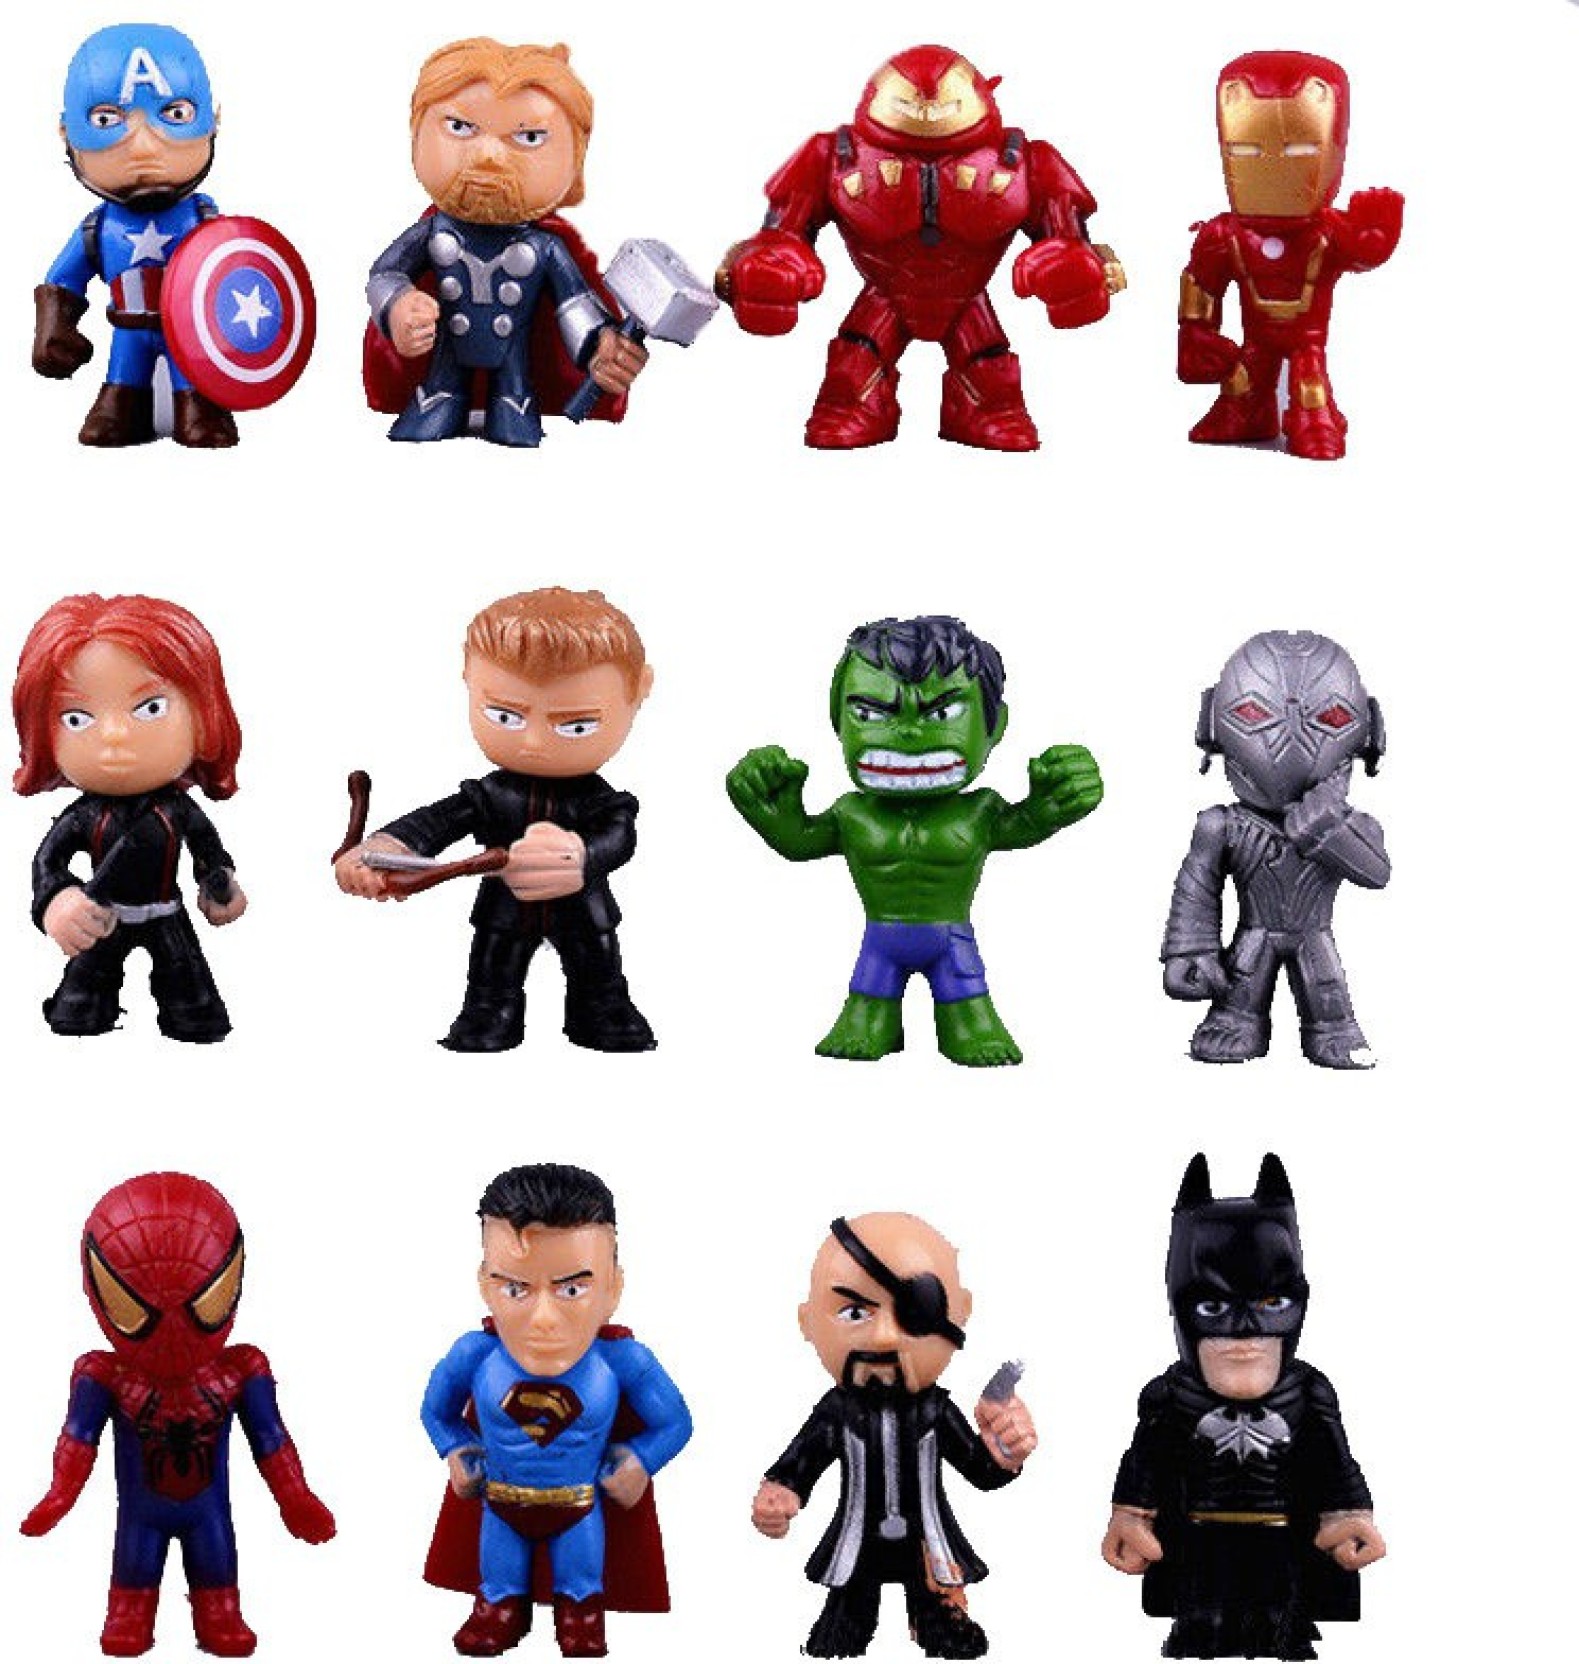 12" Marvel Comics Avengers War Machine Figure Iron Man Action Toys Collection